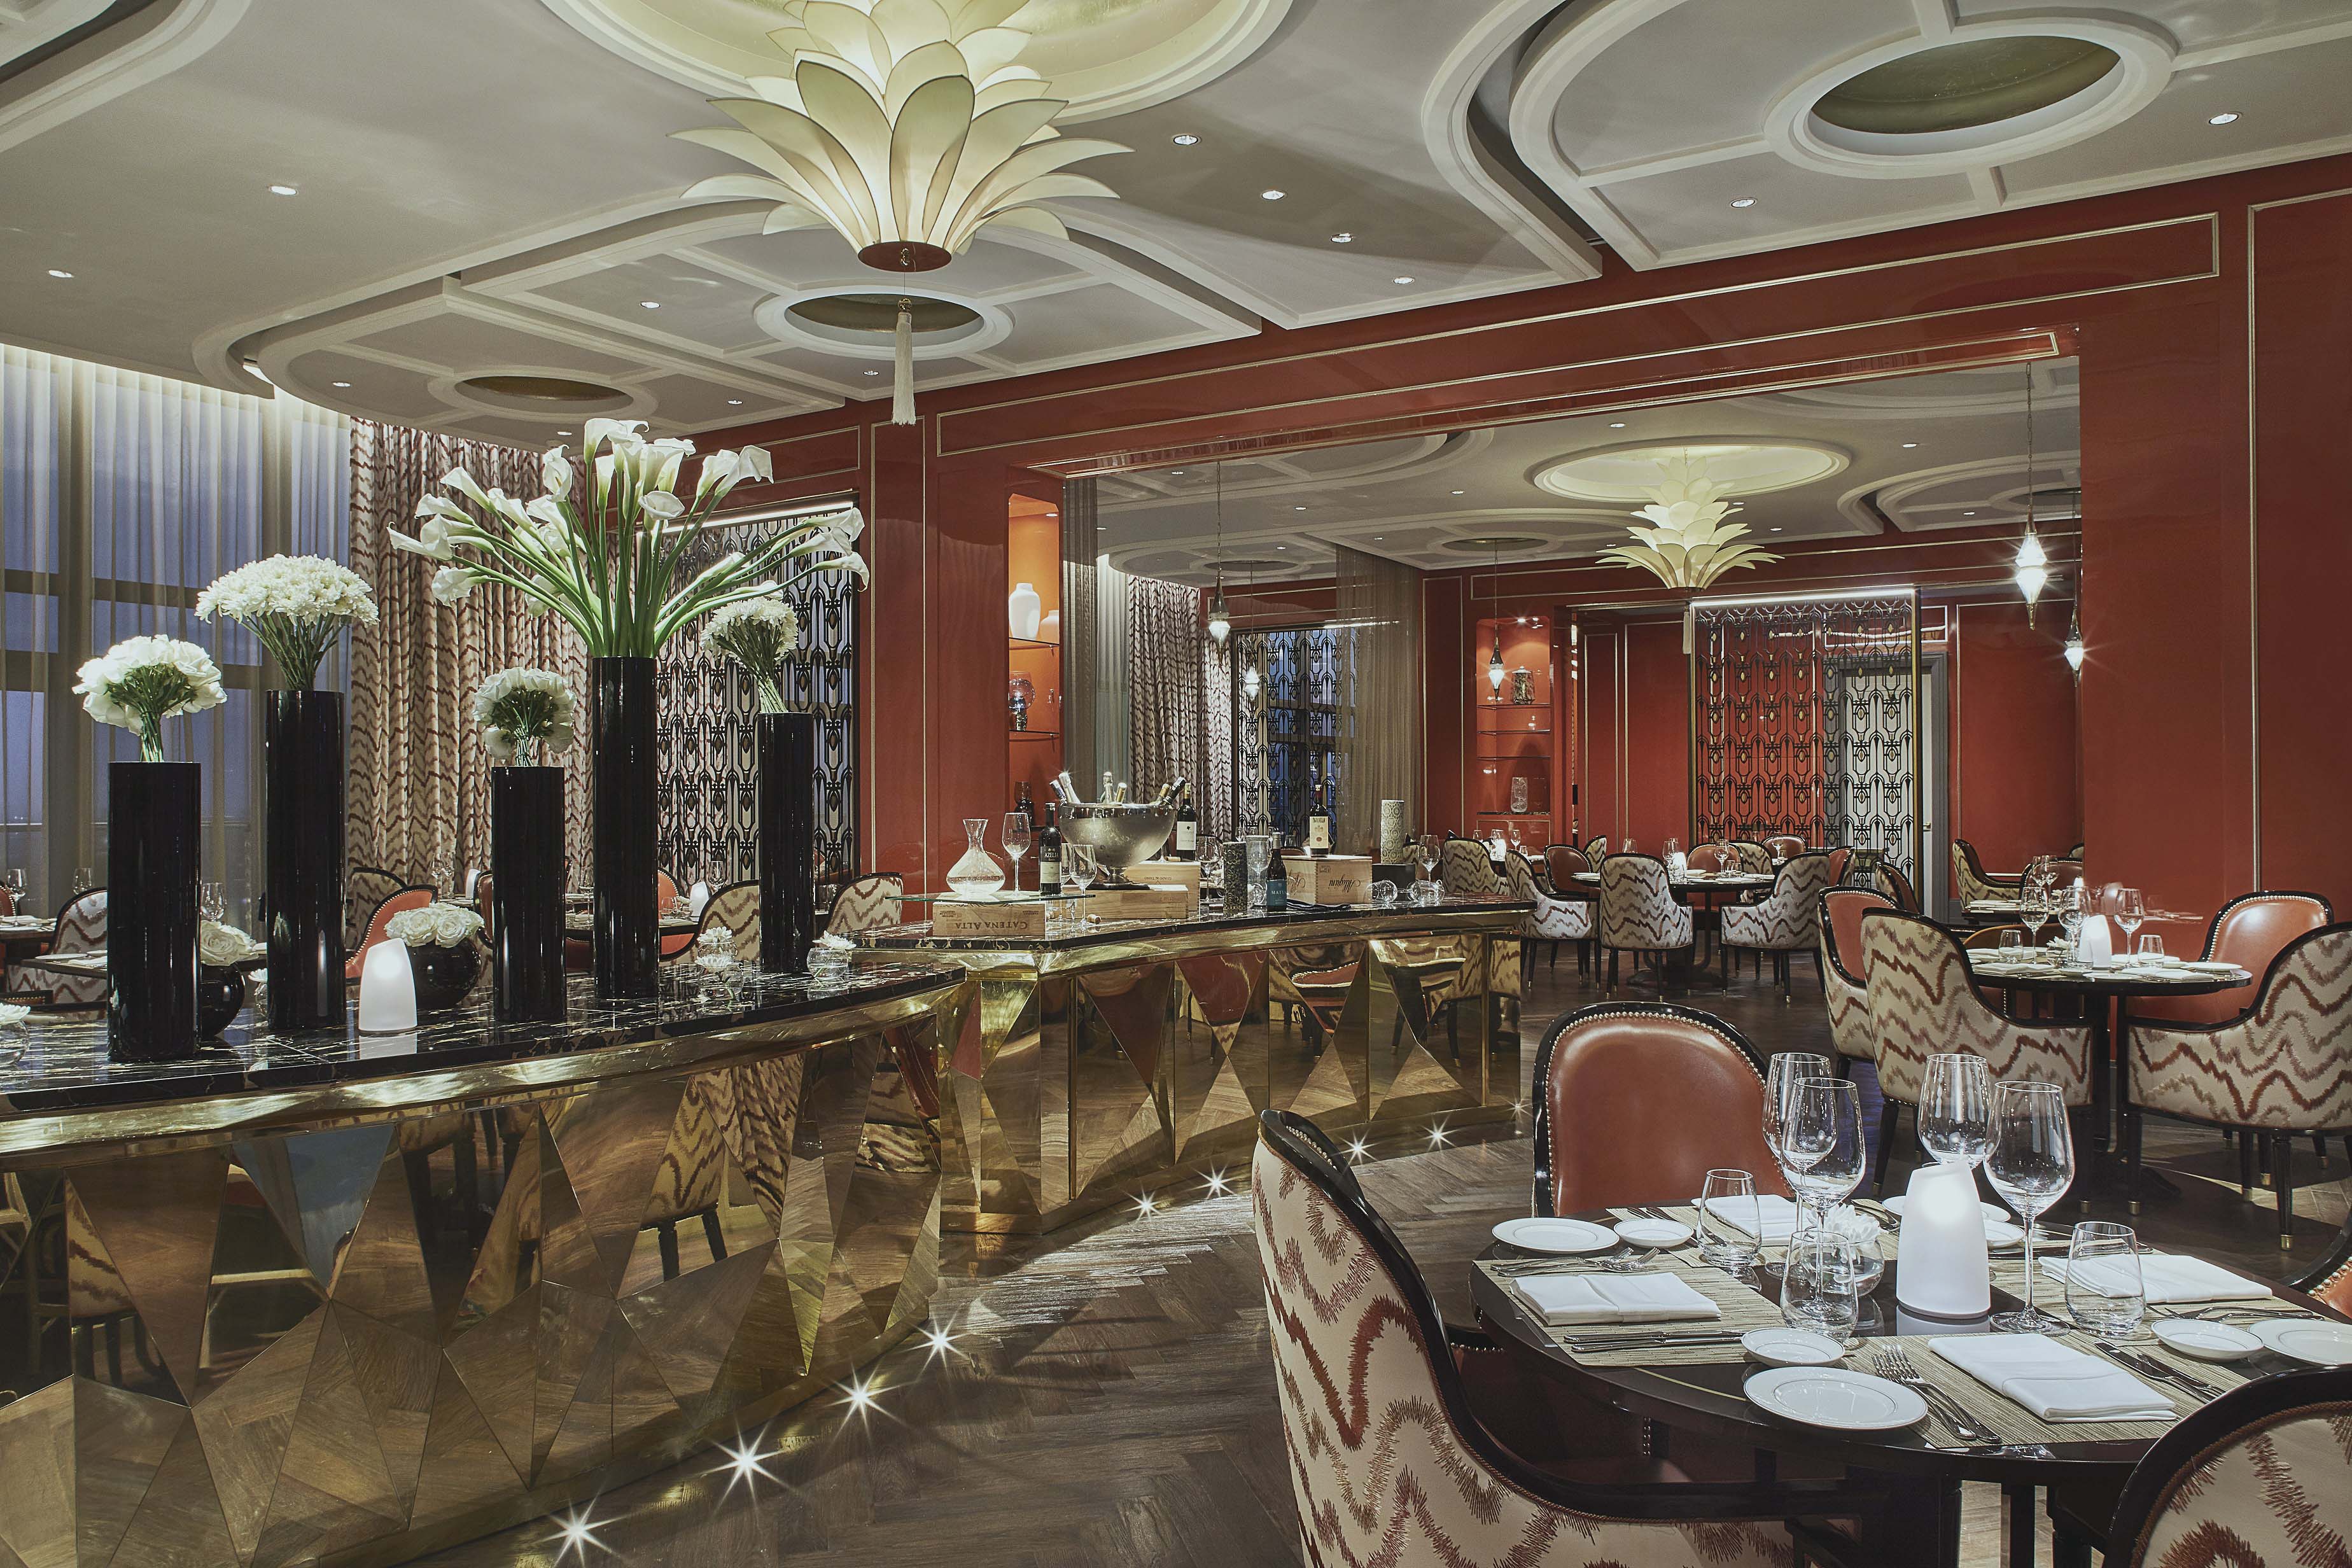 Four Seasons Hotel Jakarta's Italian chefs Marco Violano and Lorenzo Sollecito